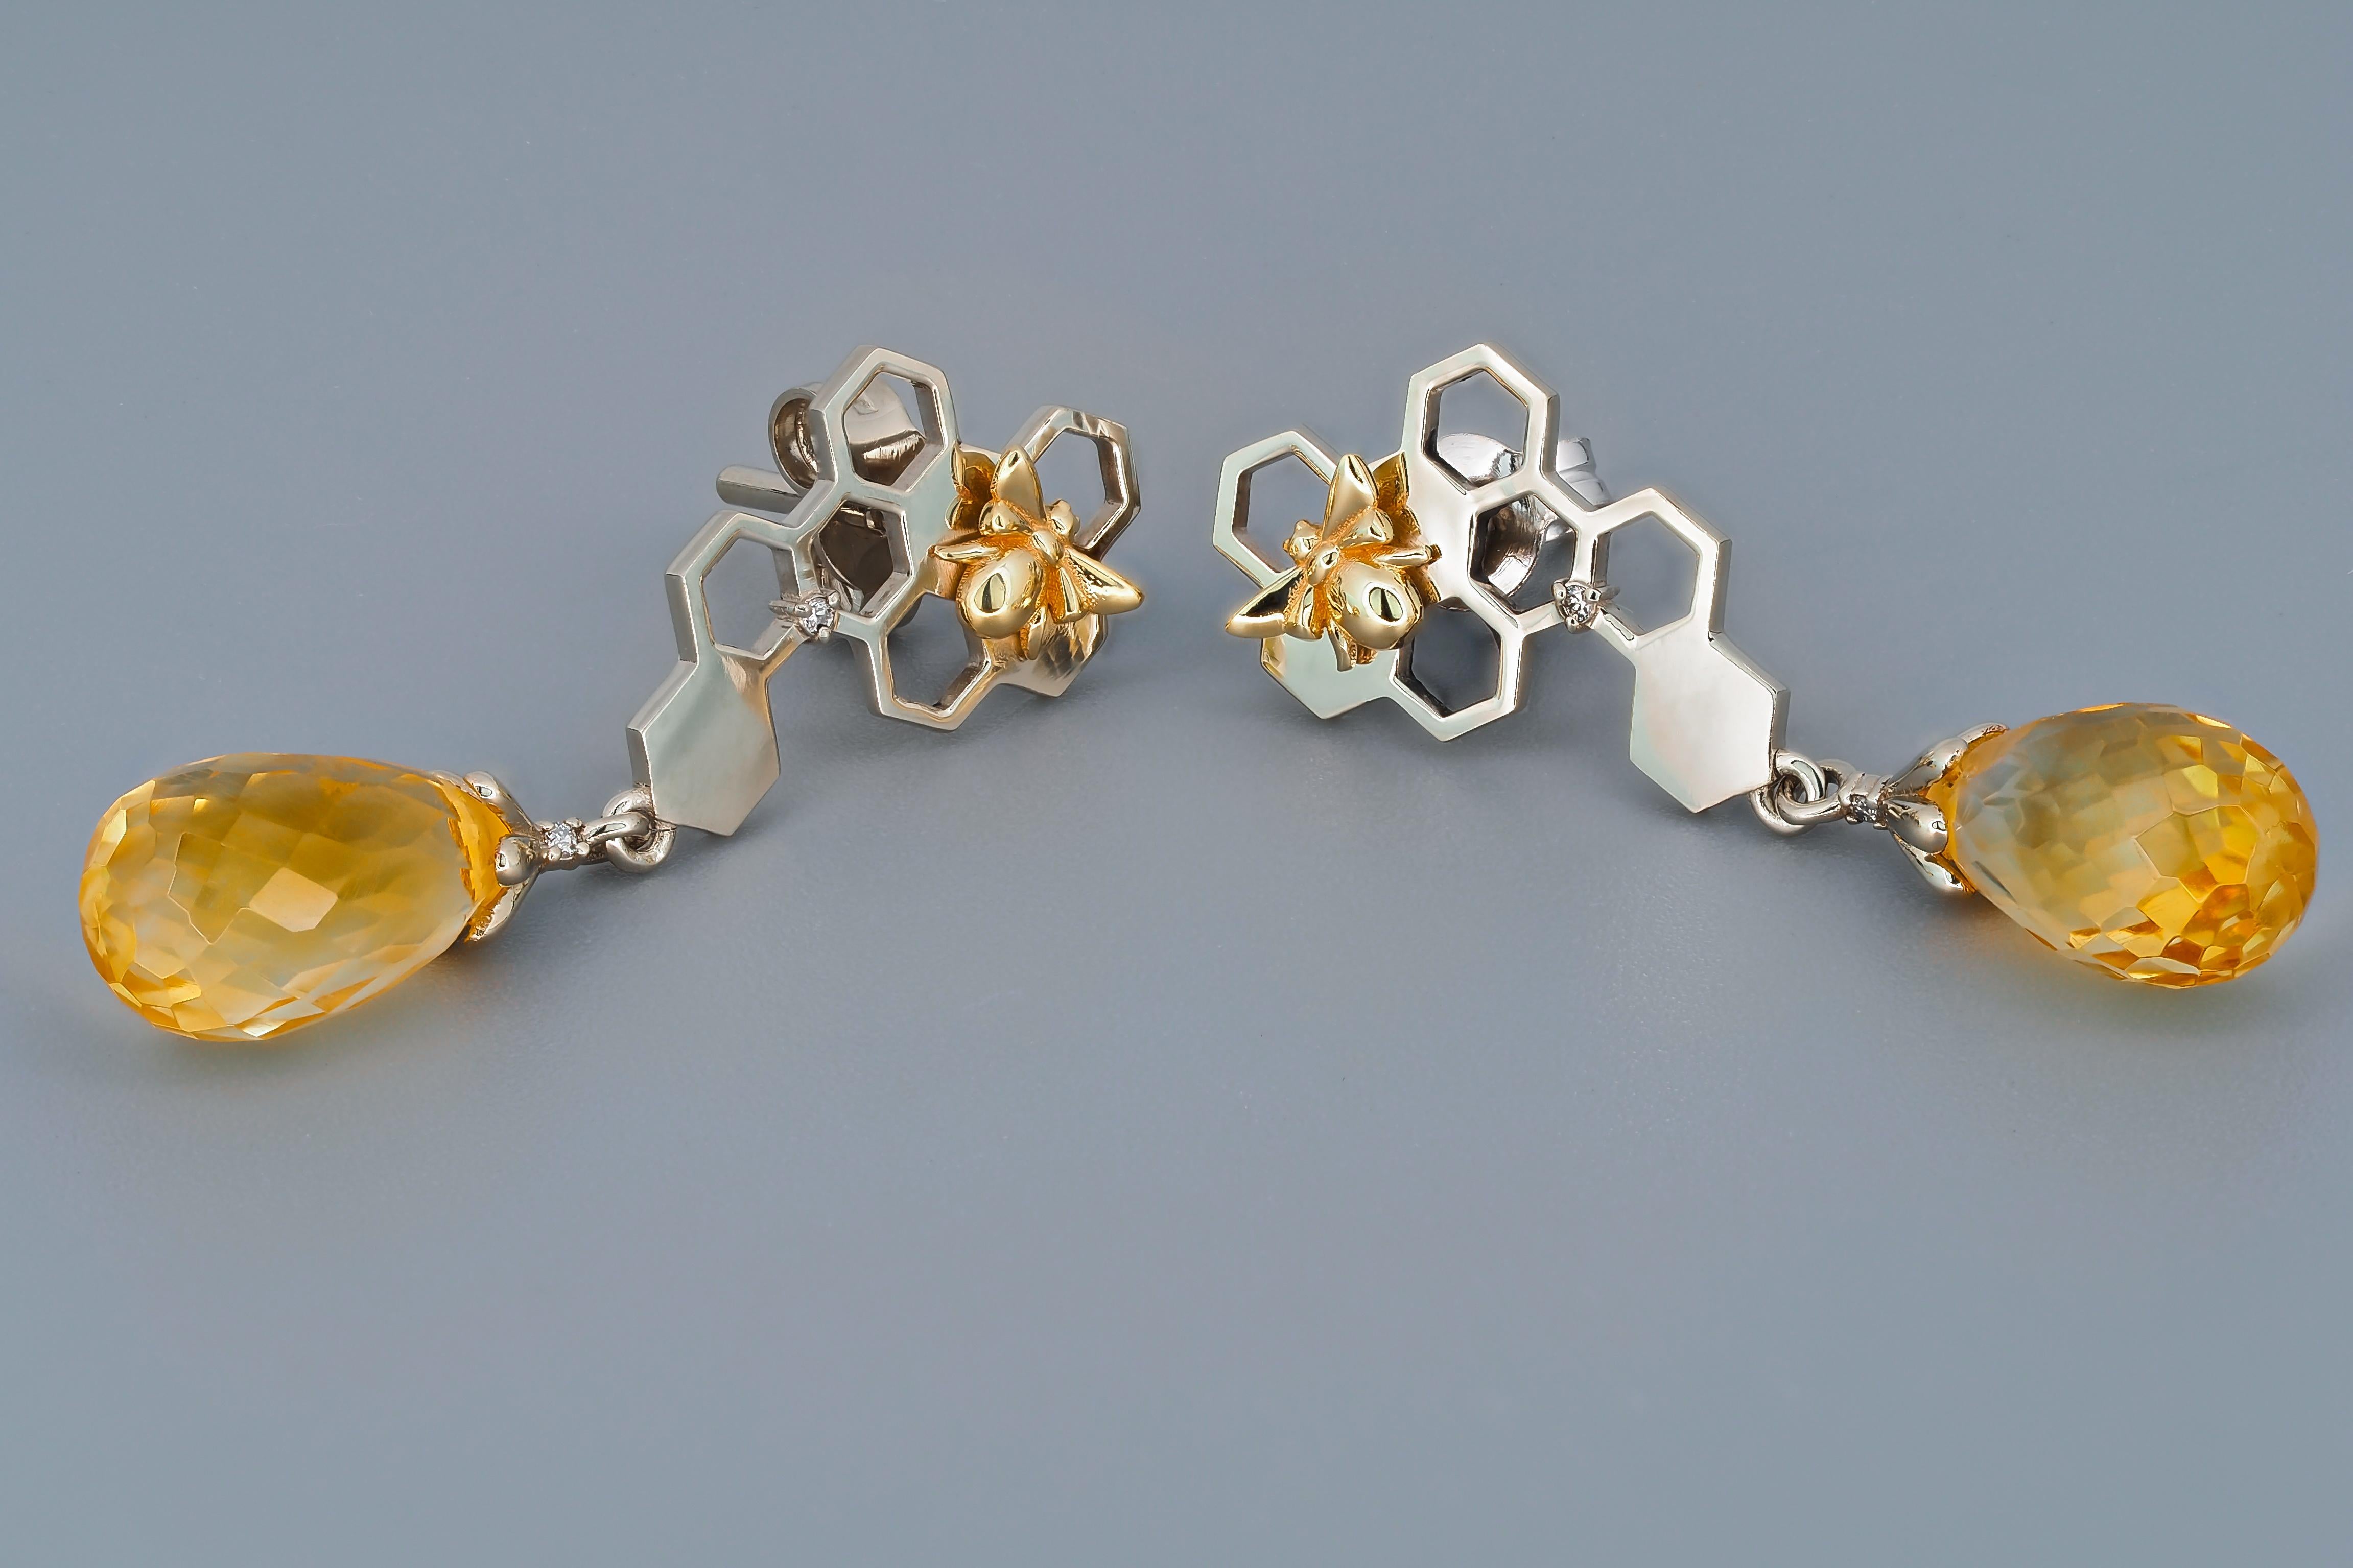 Briolette Cut Citrine earrings studs in 14 k gold.  For Sale